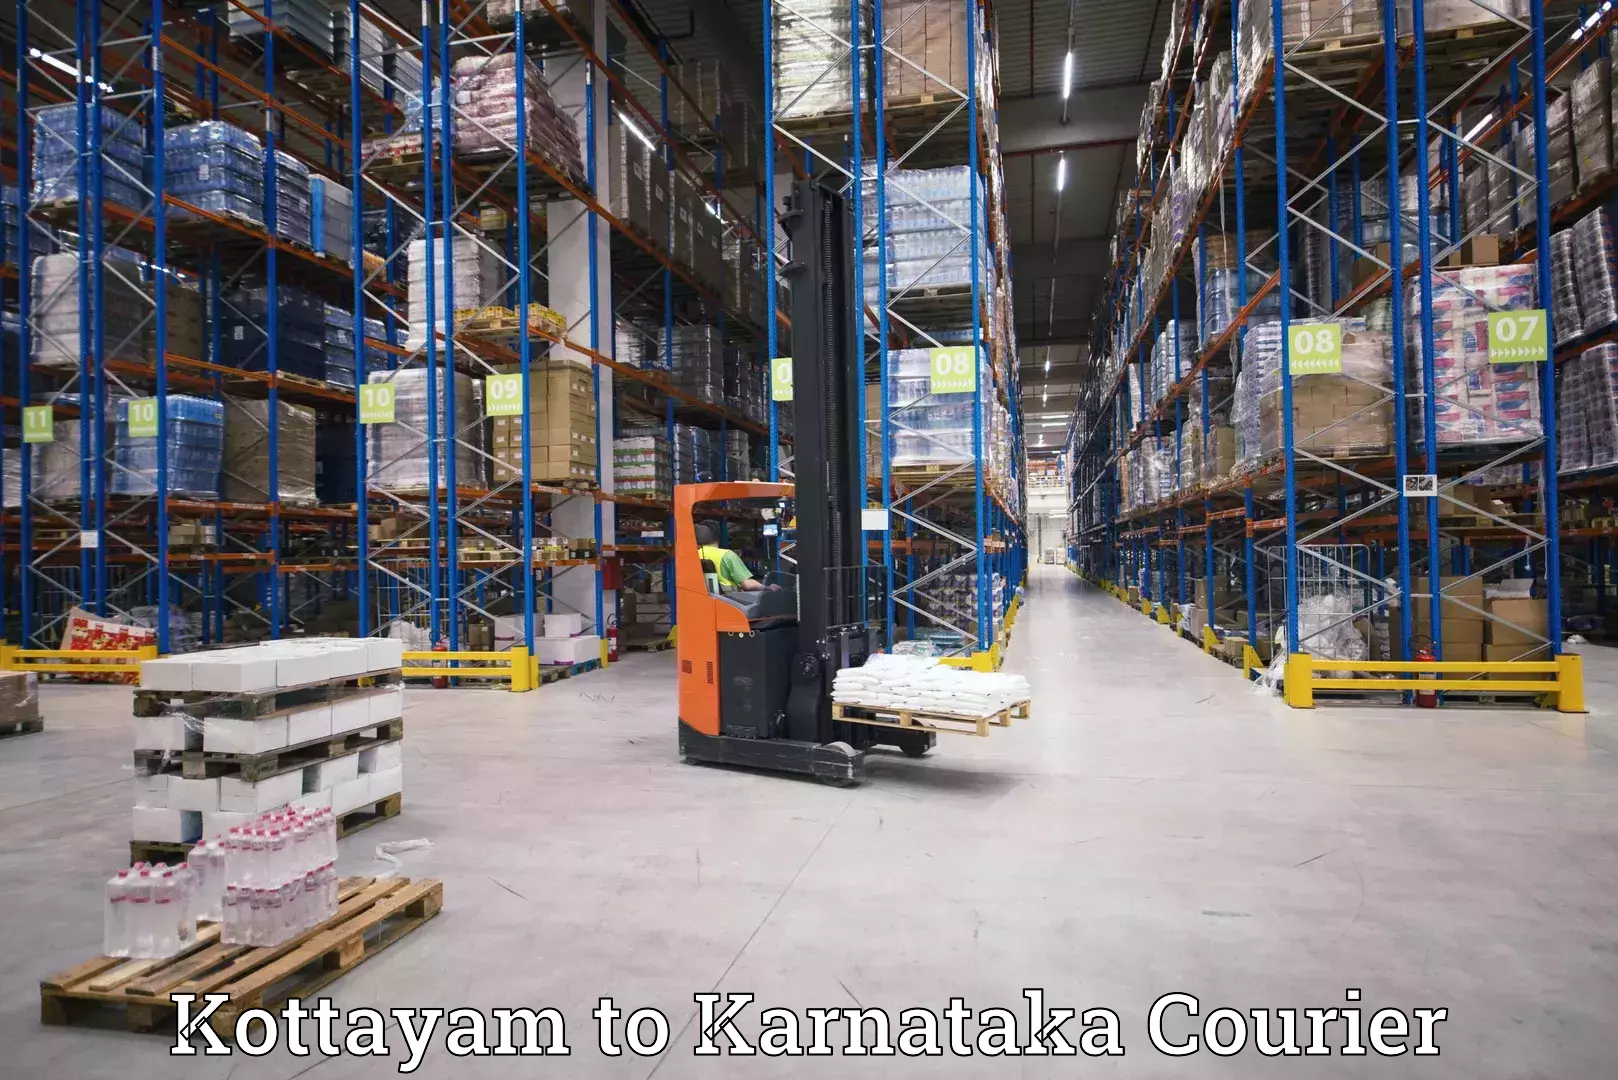 Courier service comparison Kottayam to Karnataka